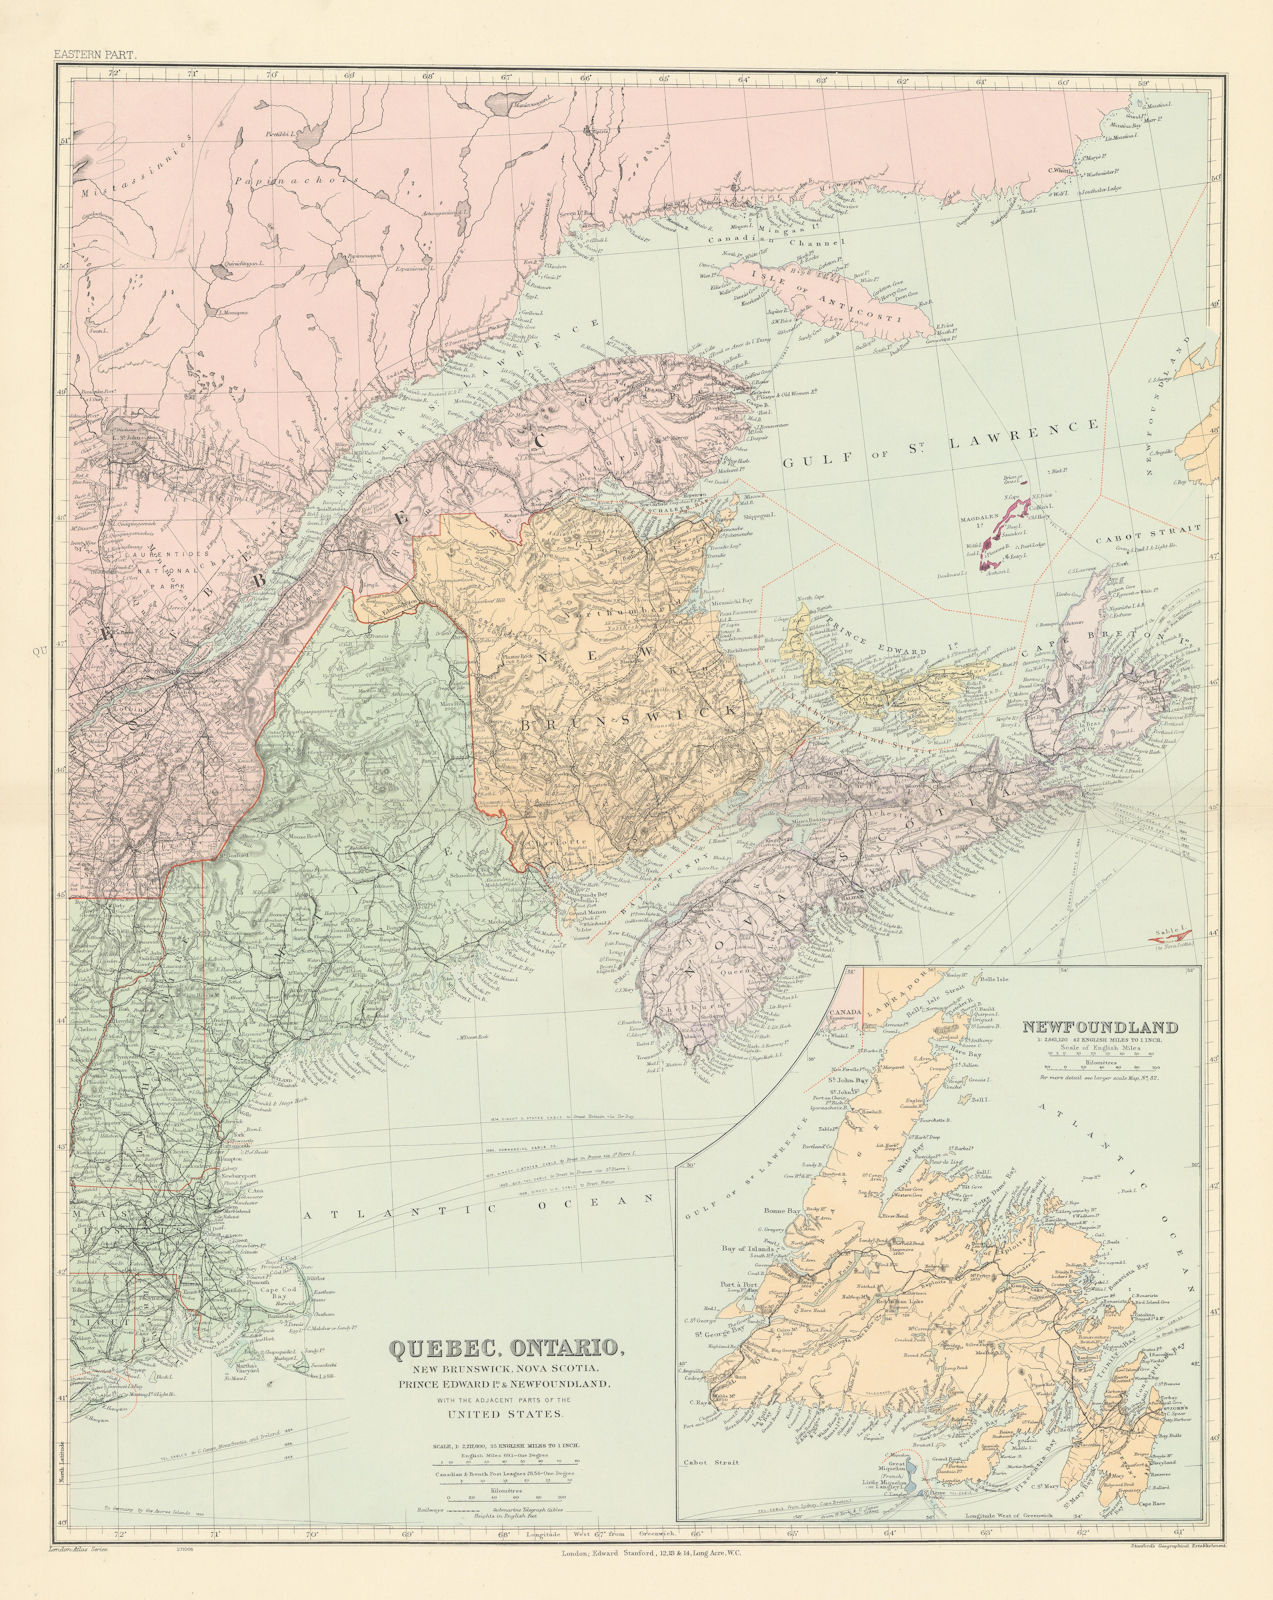 Canada Maritime Provinces. Quebec New Brunswick Maine PEI. STANFORD 1904 map